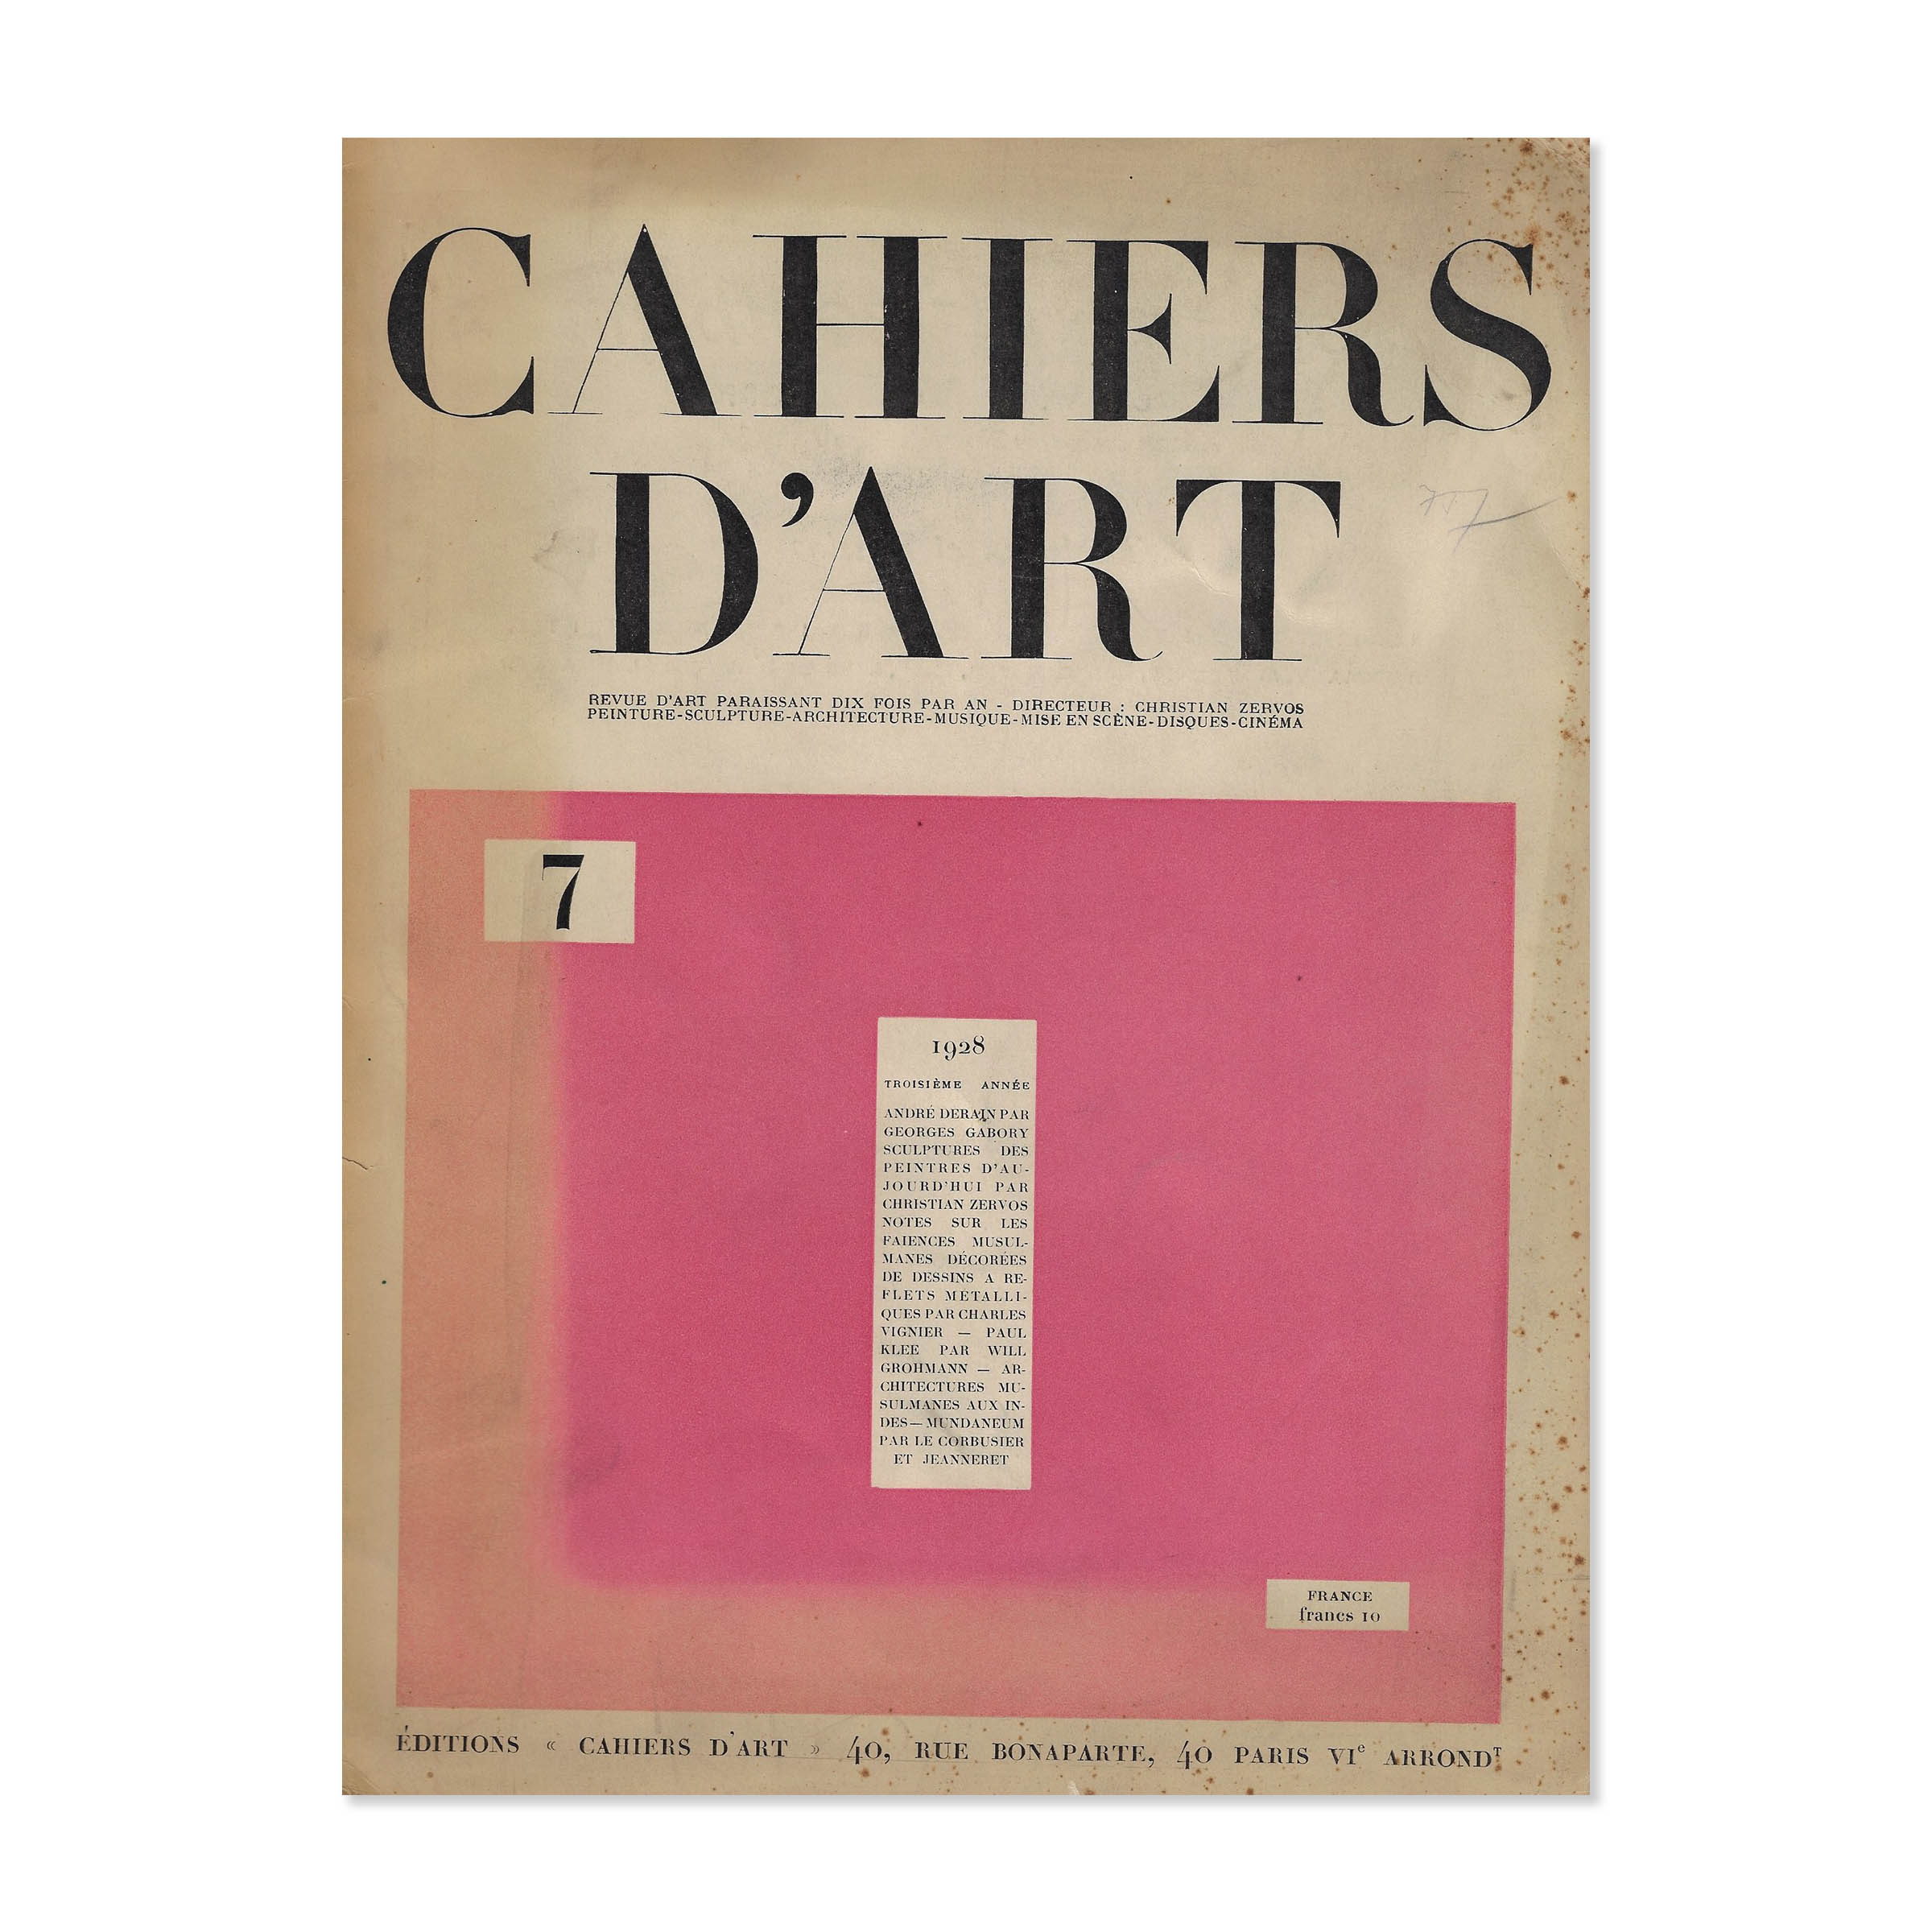 Revue Cahiers d'Art, 1928, n°7. Cover view